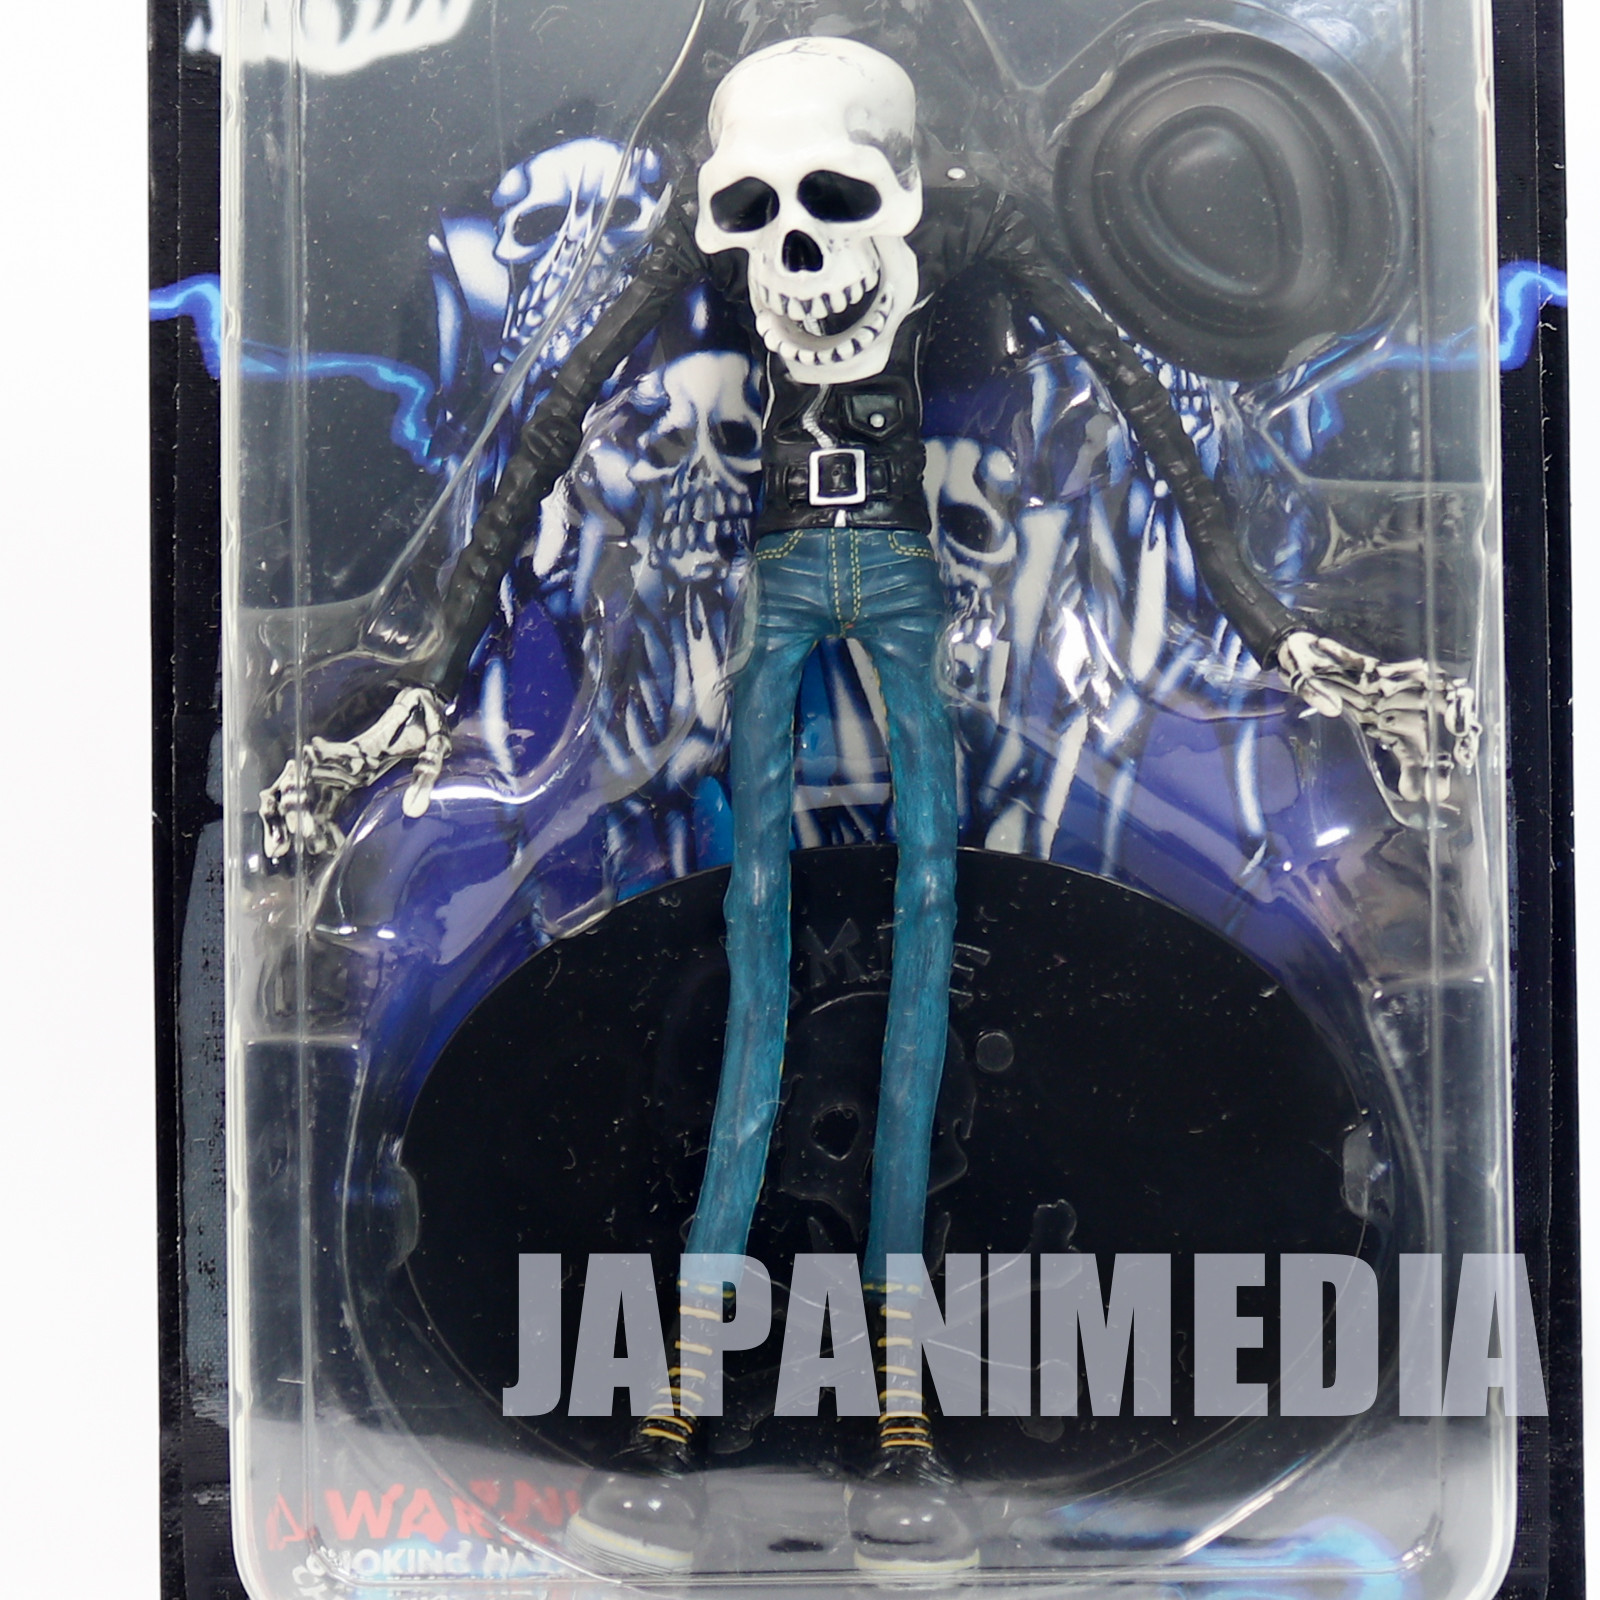 Thee Michelle Gun Elephant Leather Jkt Skull Bendable Figure Medicom Toy JAPAN